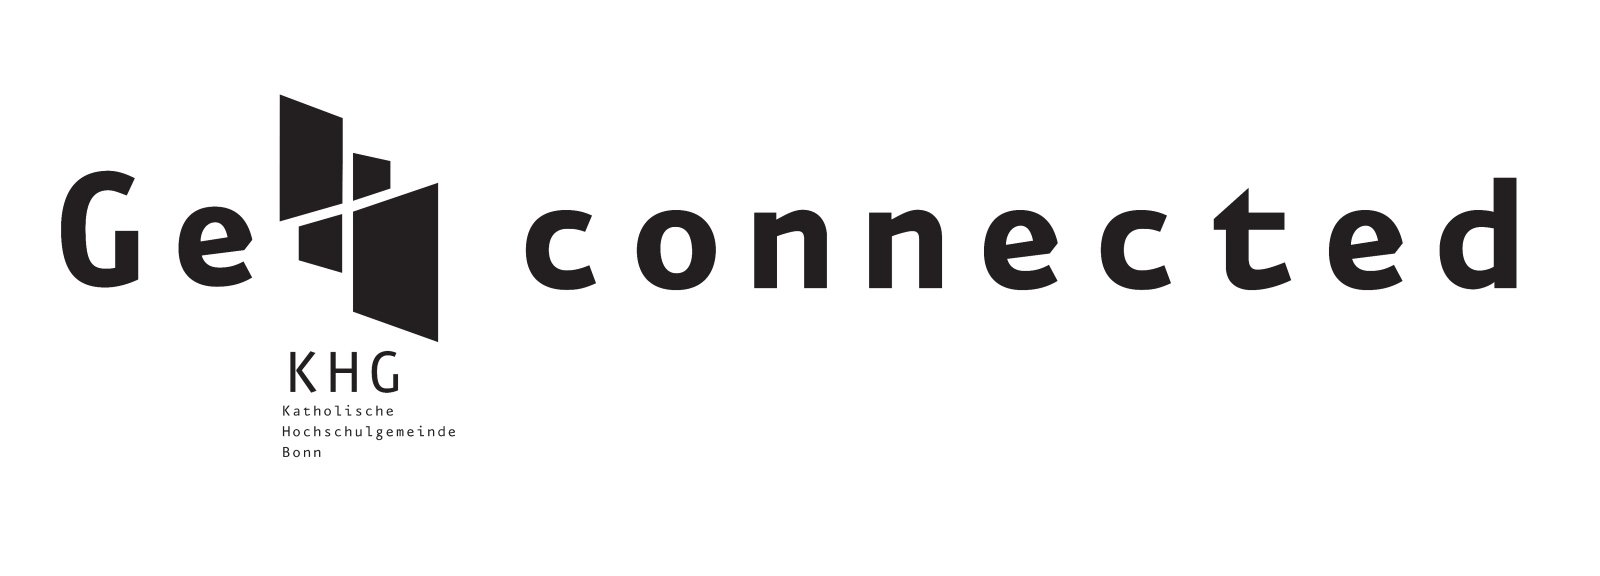 Get Connected Logo (c) KHG Bonn